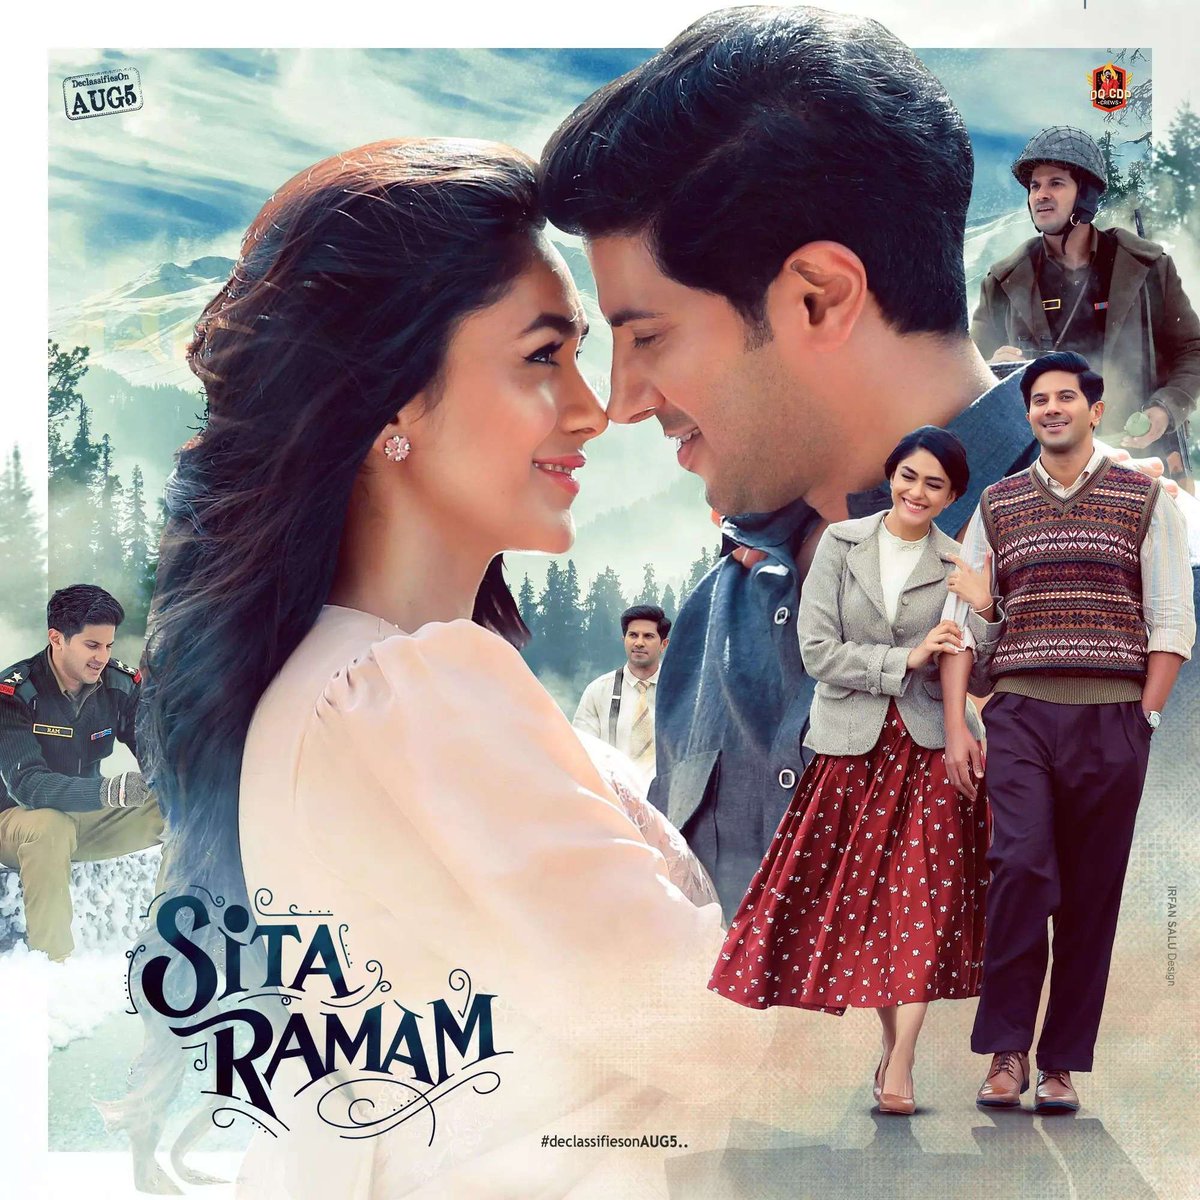 #SitaRamamHindi the best movie and I love the @dulQuer and @mrunal0801 pair I swear this movie will be a super hit 😊 #SitaRamamreview ⭐⭐⭐⭐